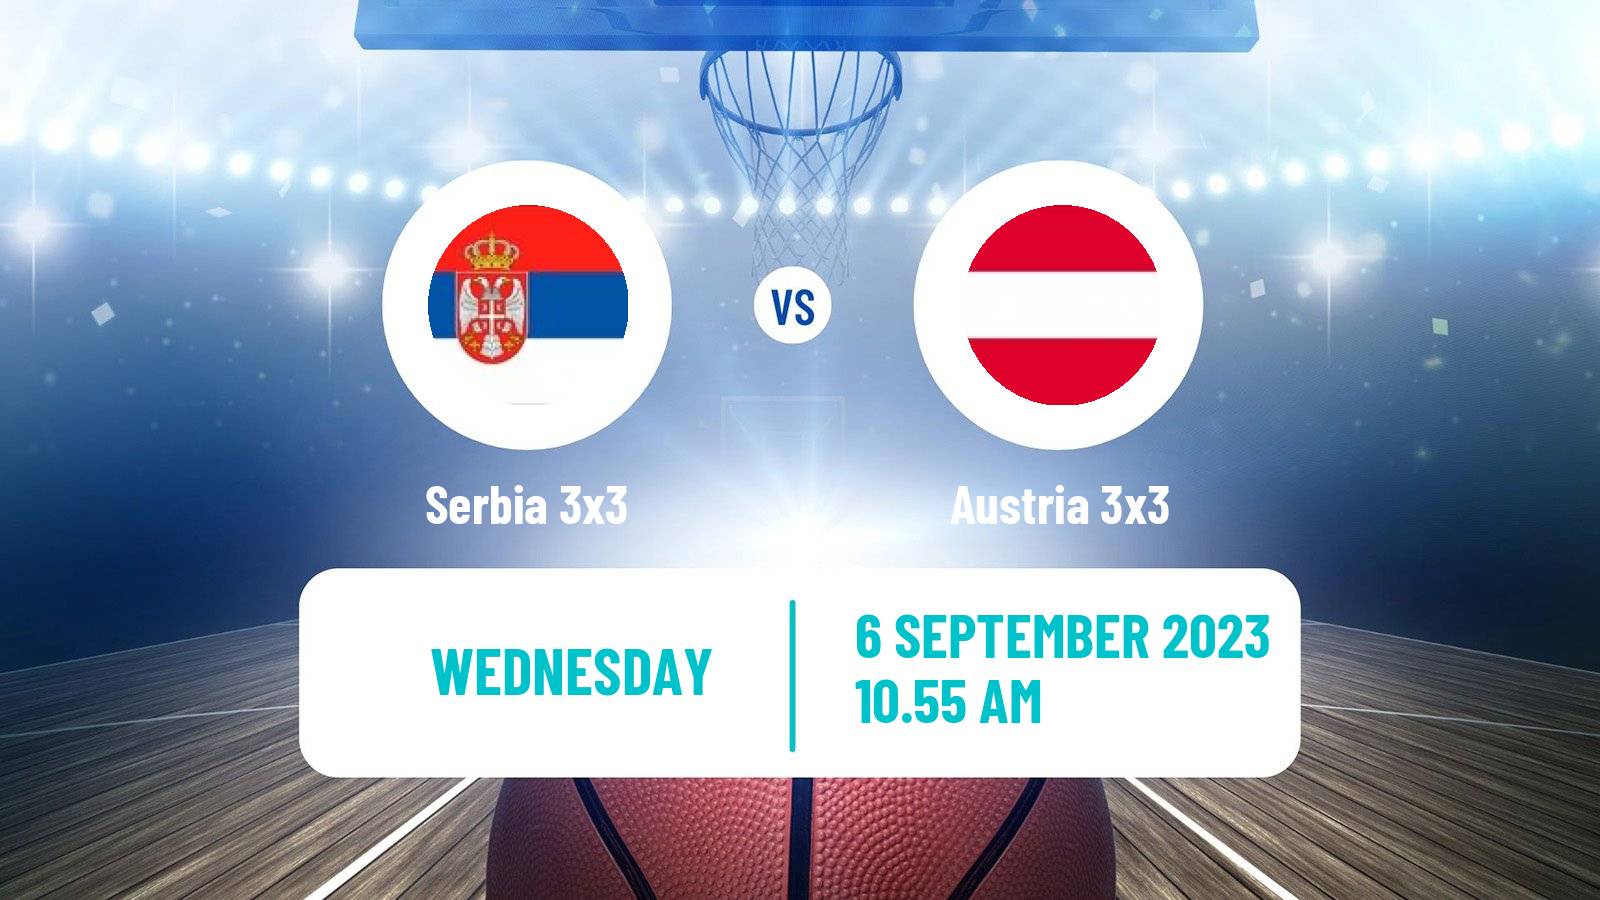 Basketball Europe Cup Basketball 3x3 Serbia 3x3 - Austria 3x3